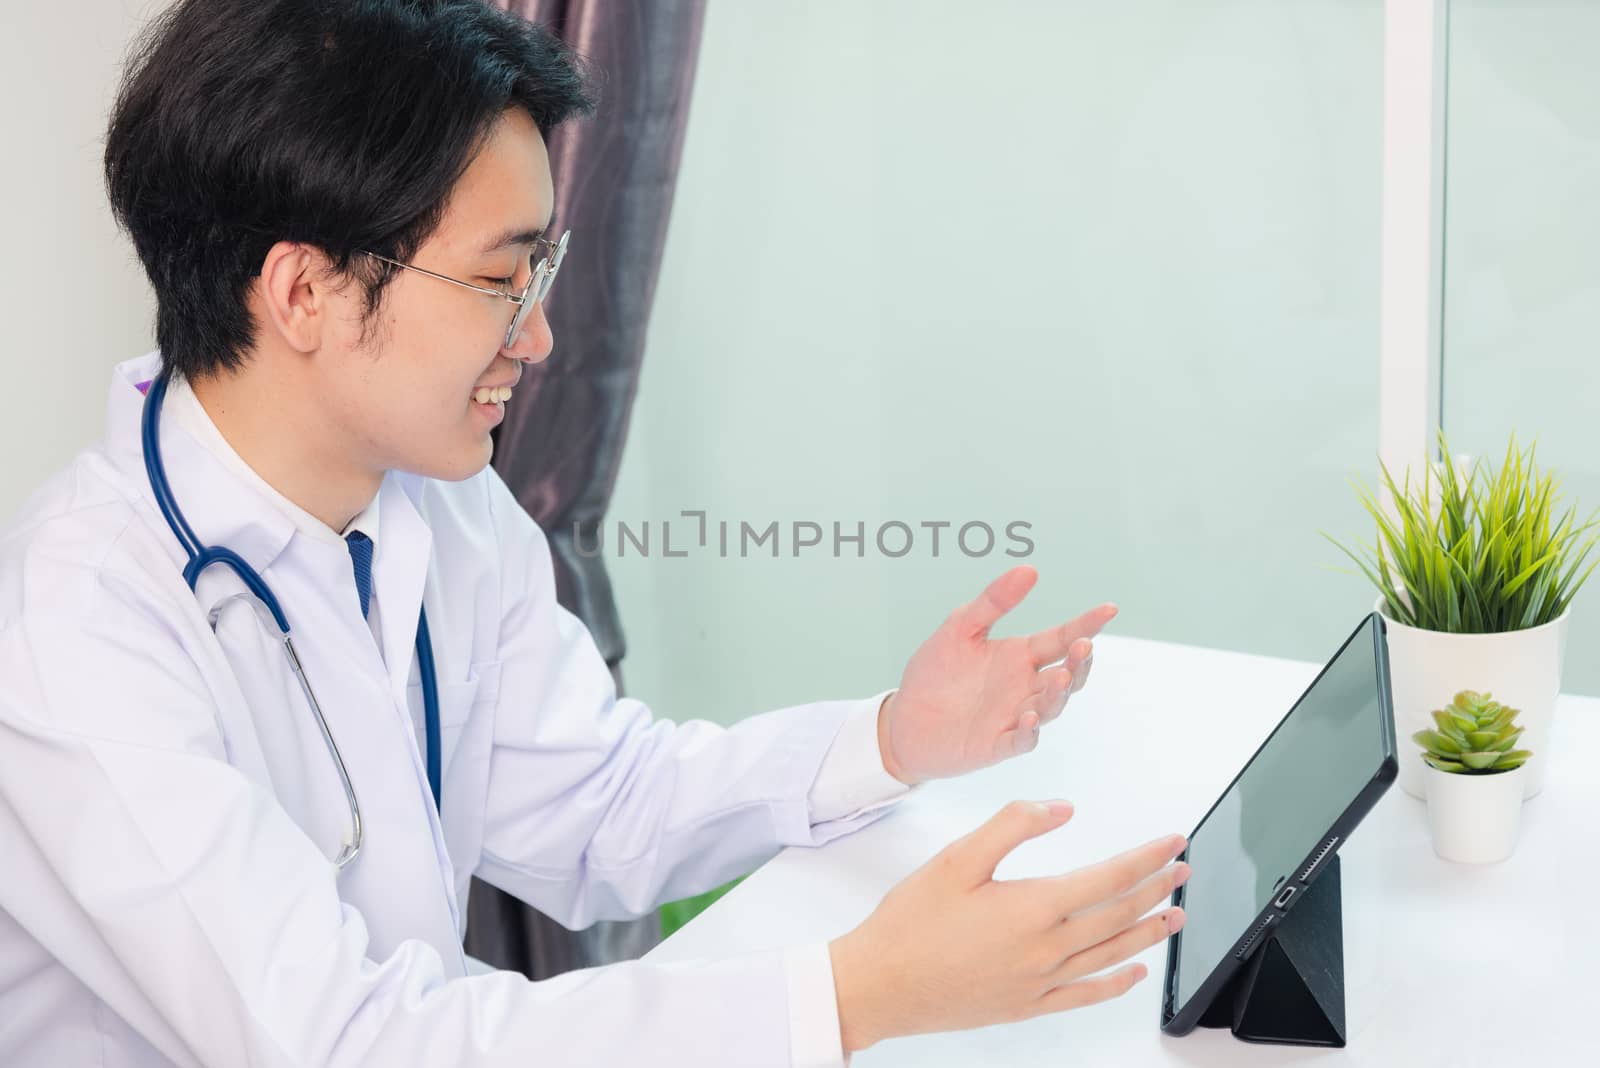 Doctor man smile use modern smart digital tablet computer explai by Sorapop